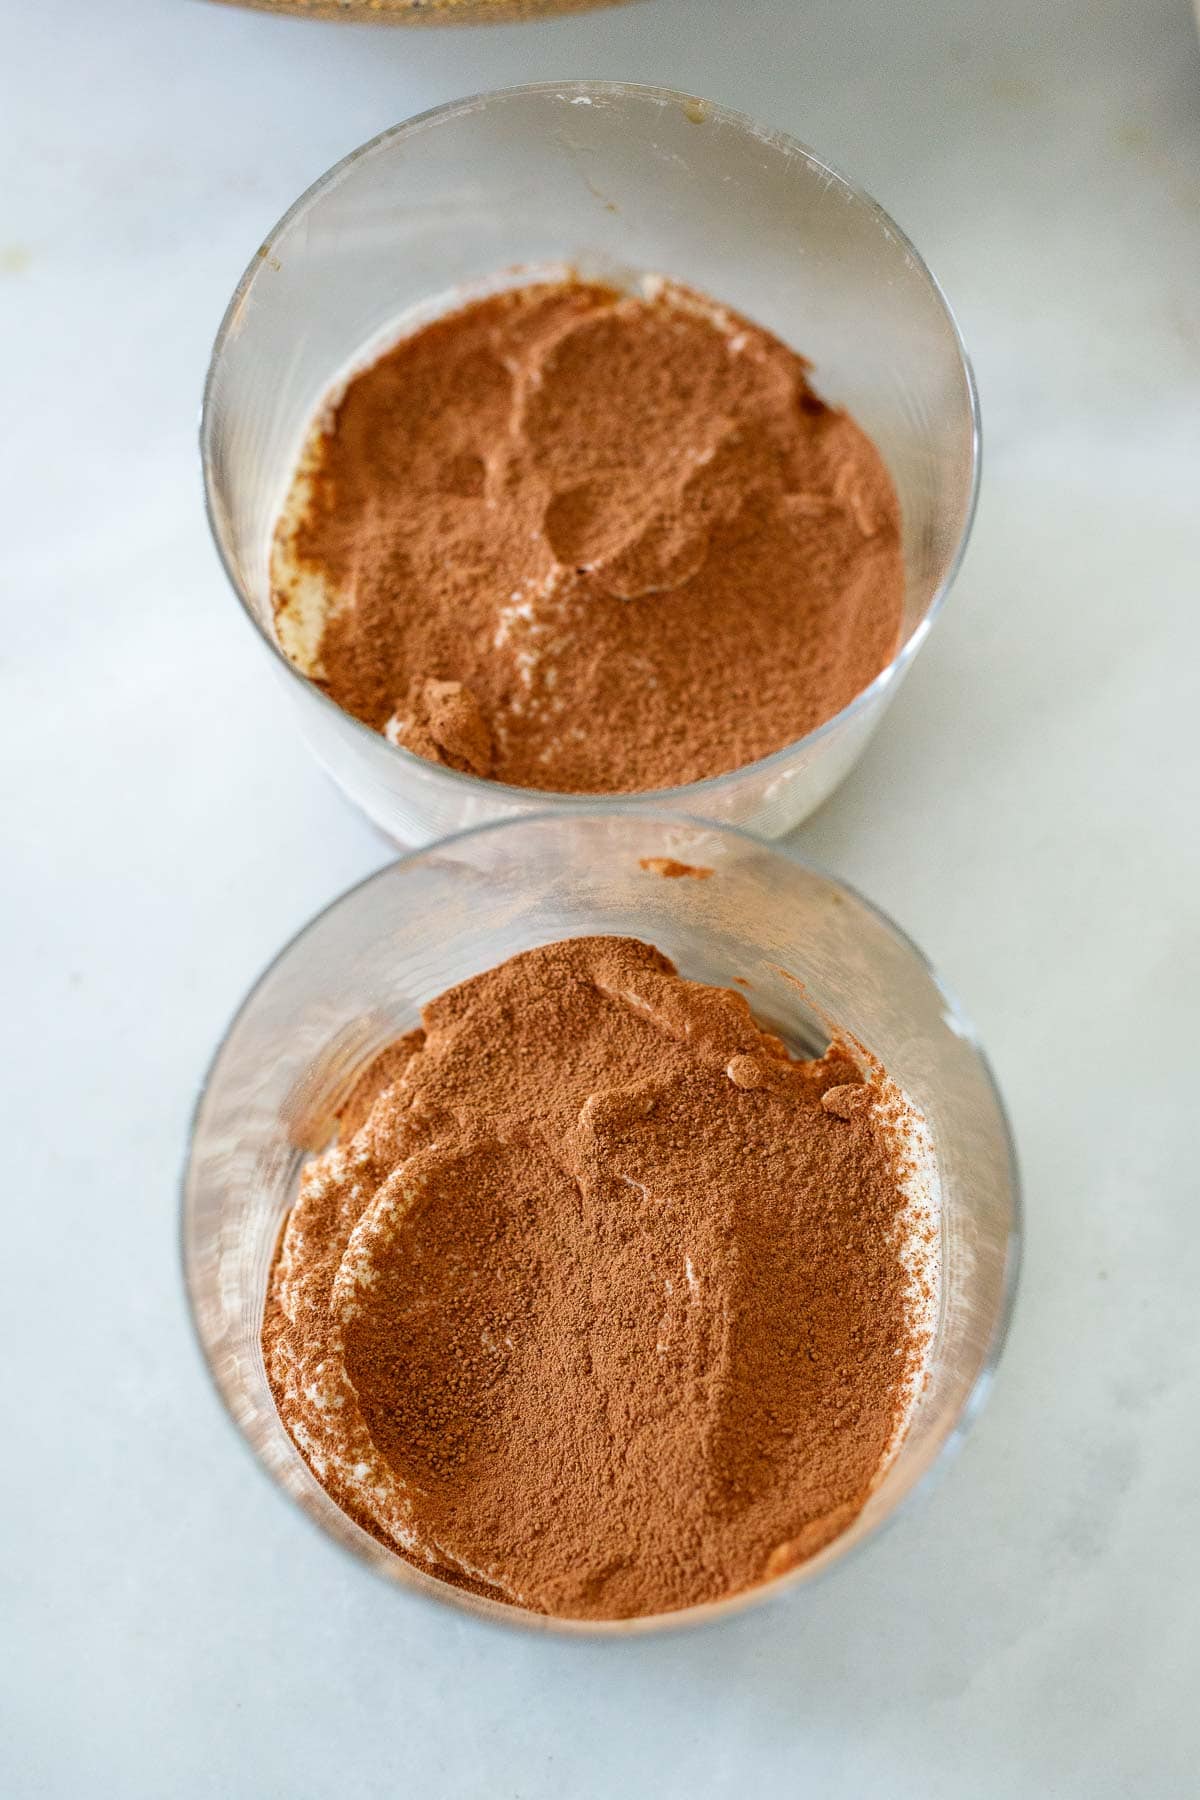 generous dusting of cocoa powder on top of tiramisu layers